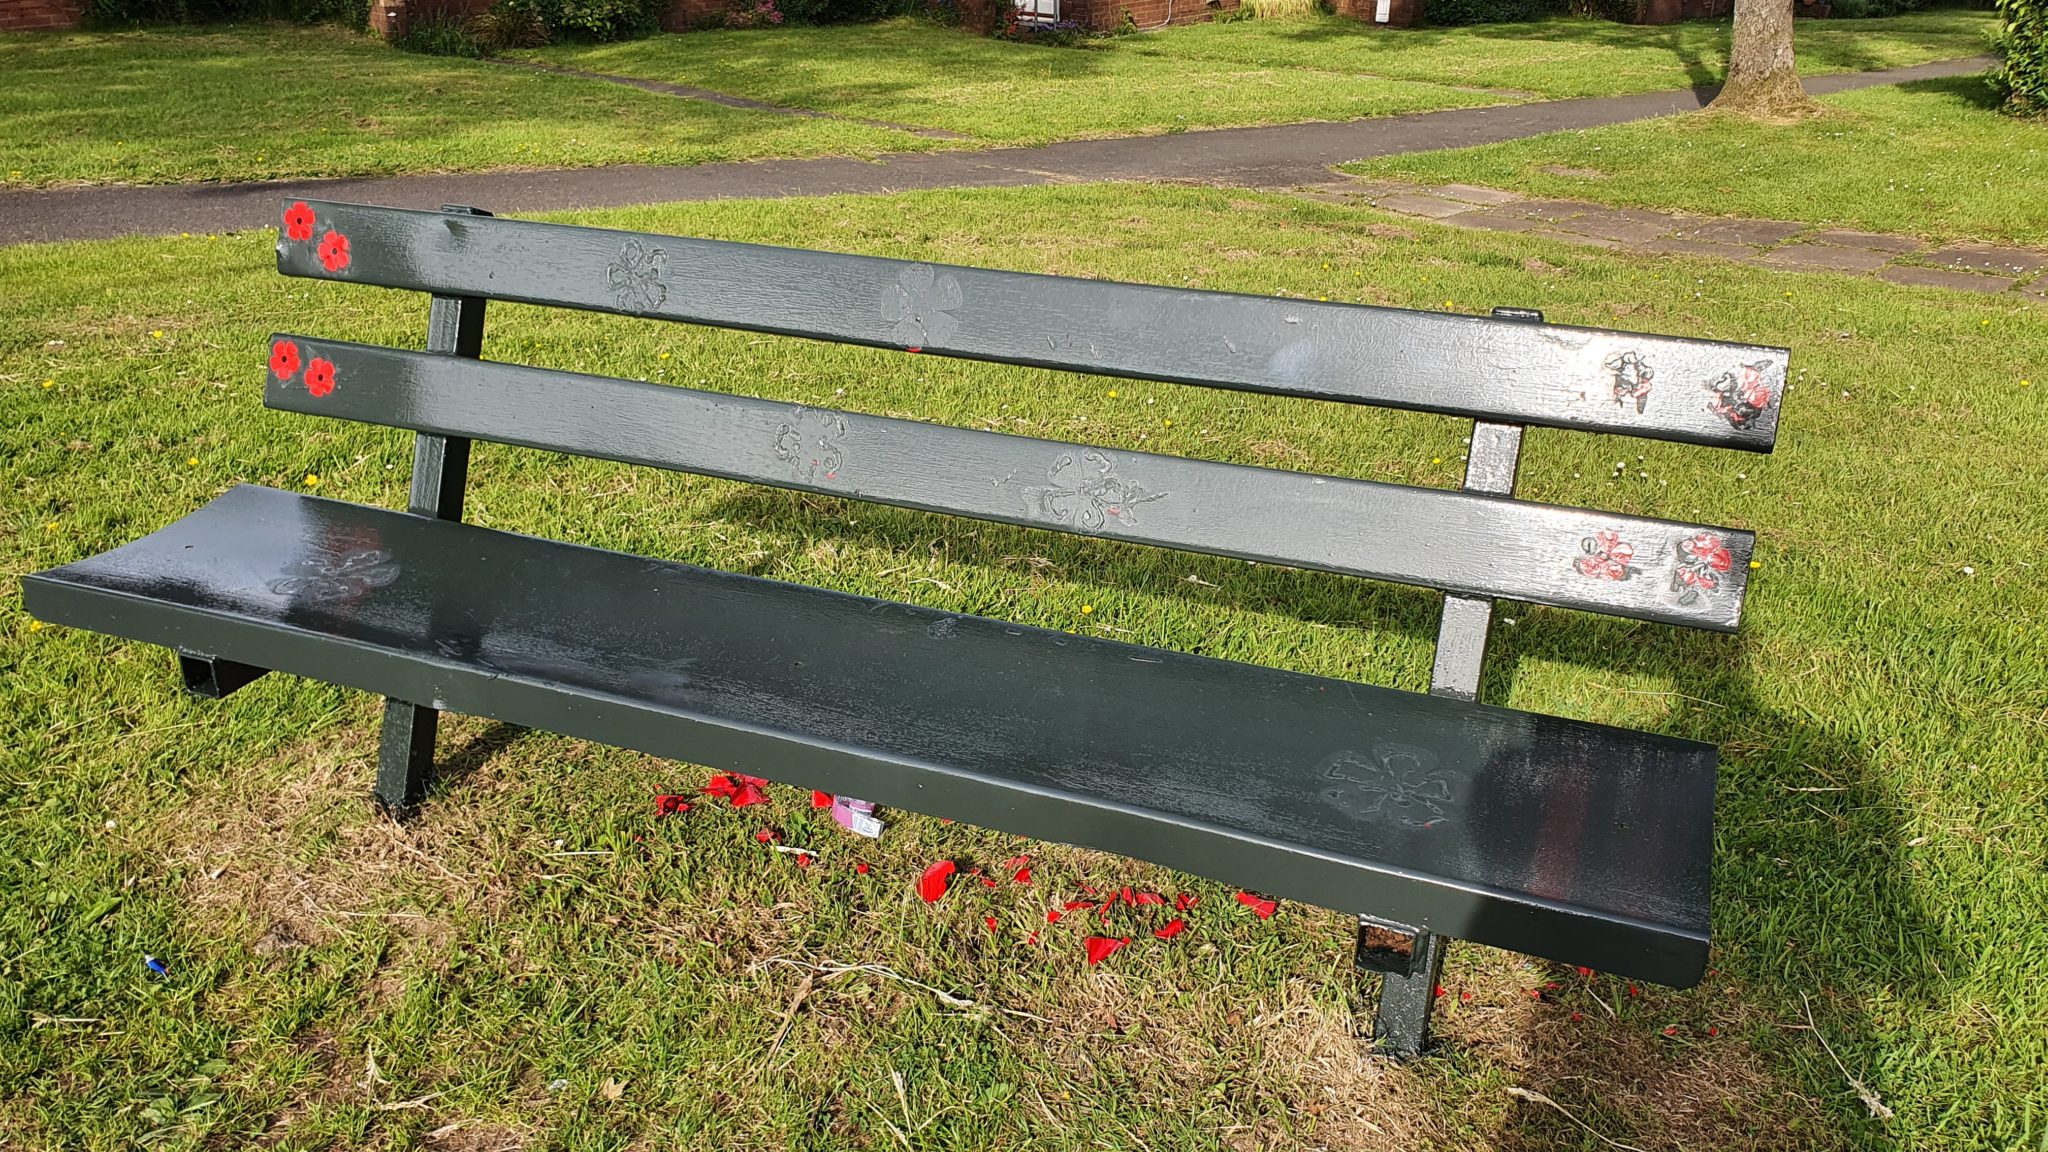 The vandalised bench on Fairhill